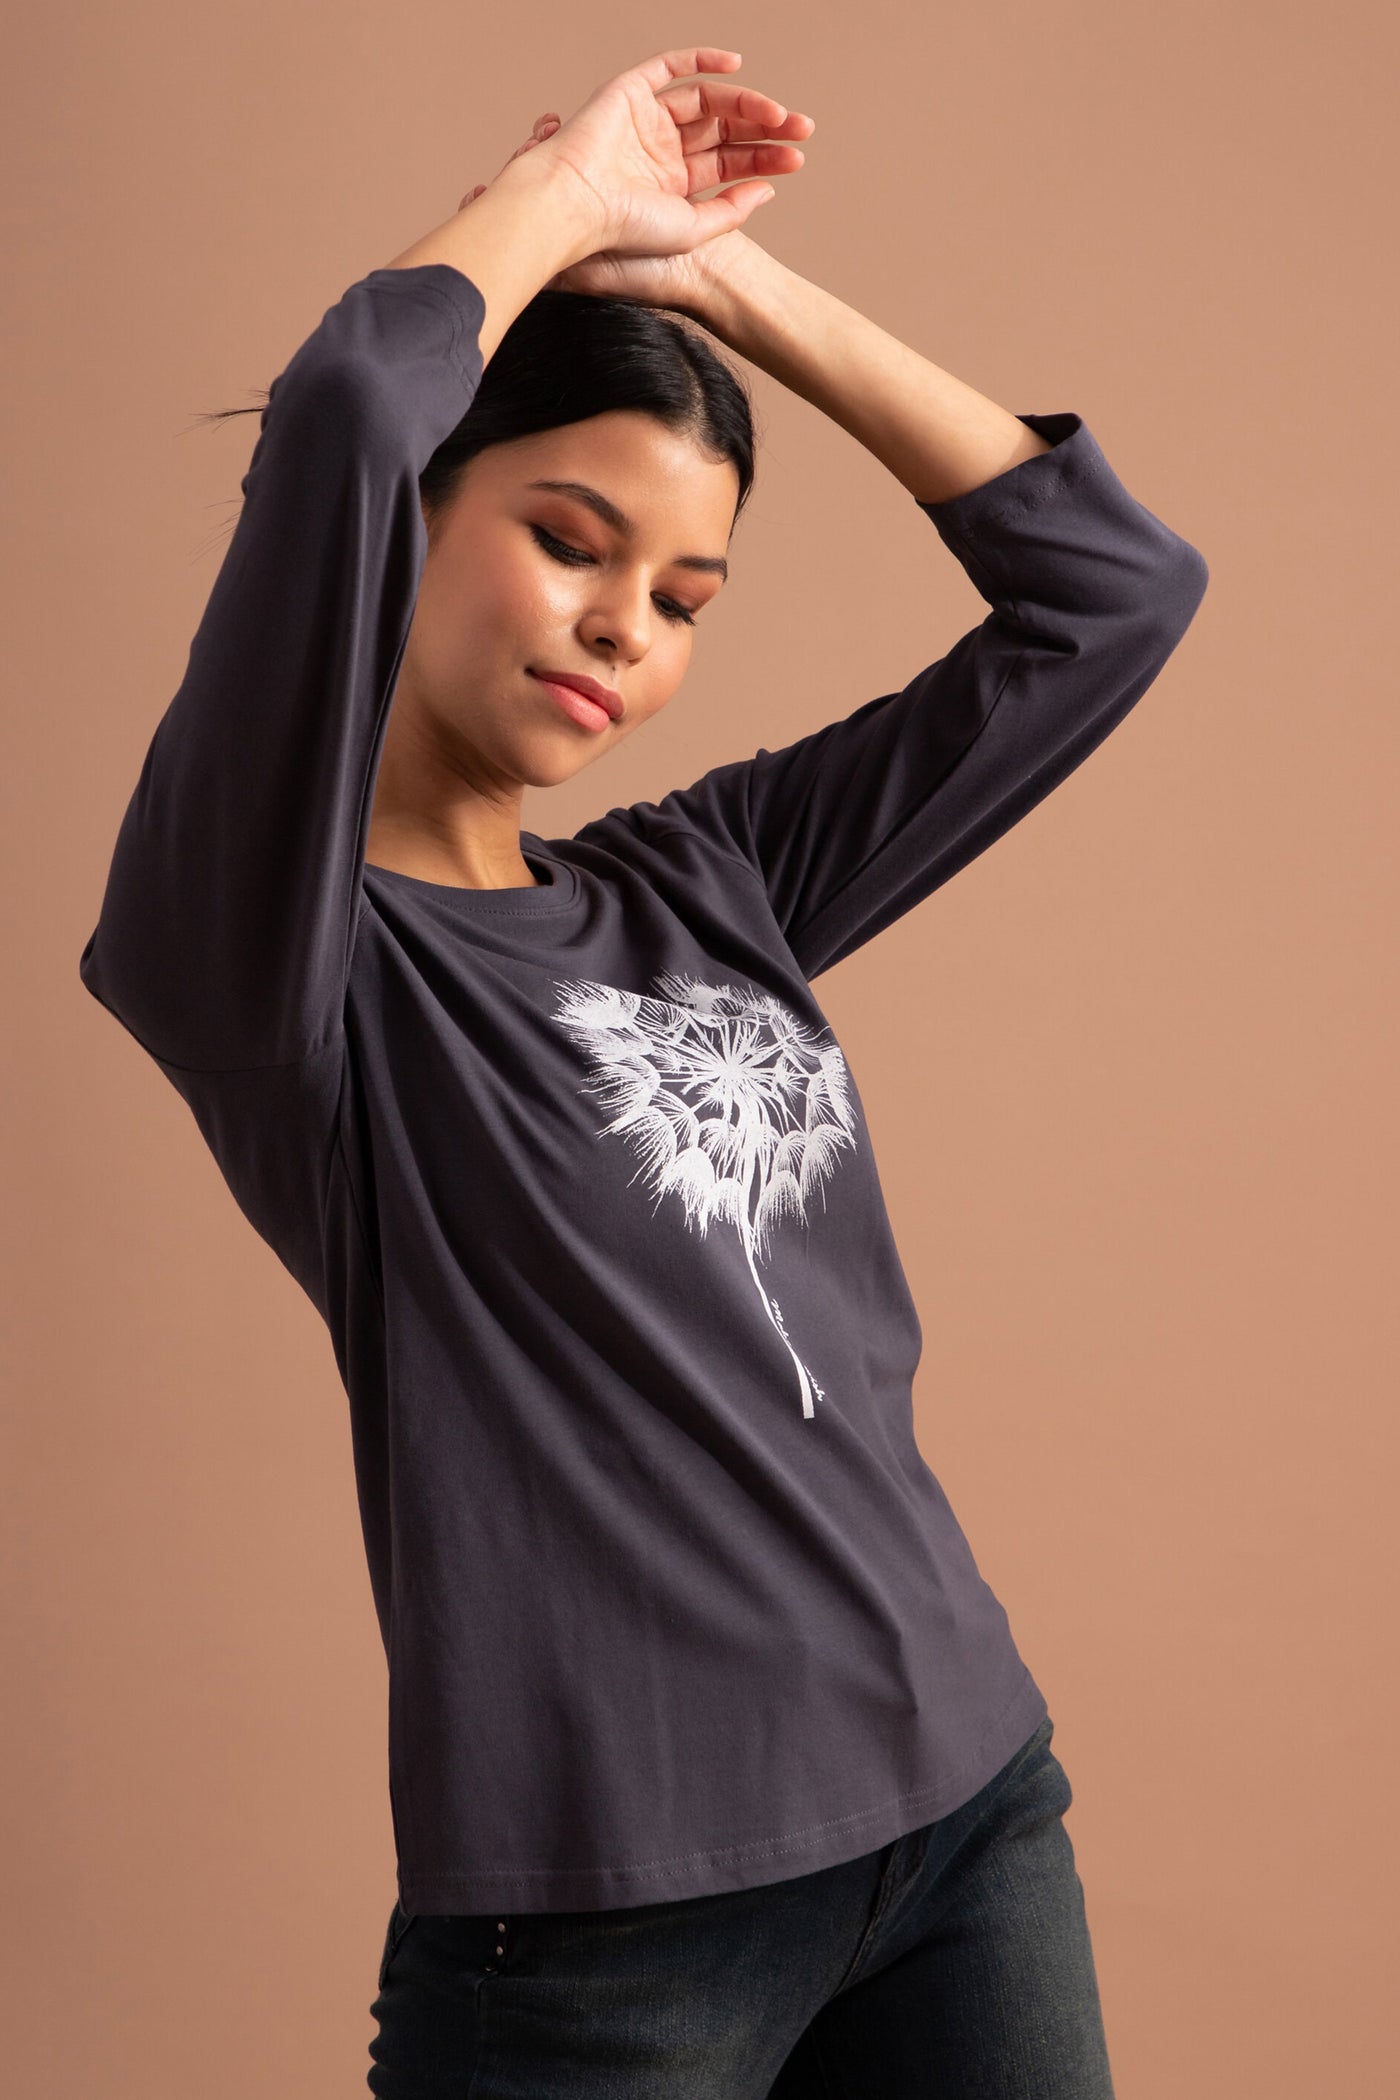 India Ink Mix Long Sleeve T-Shirt